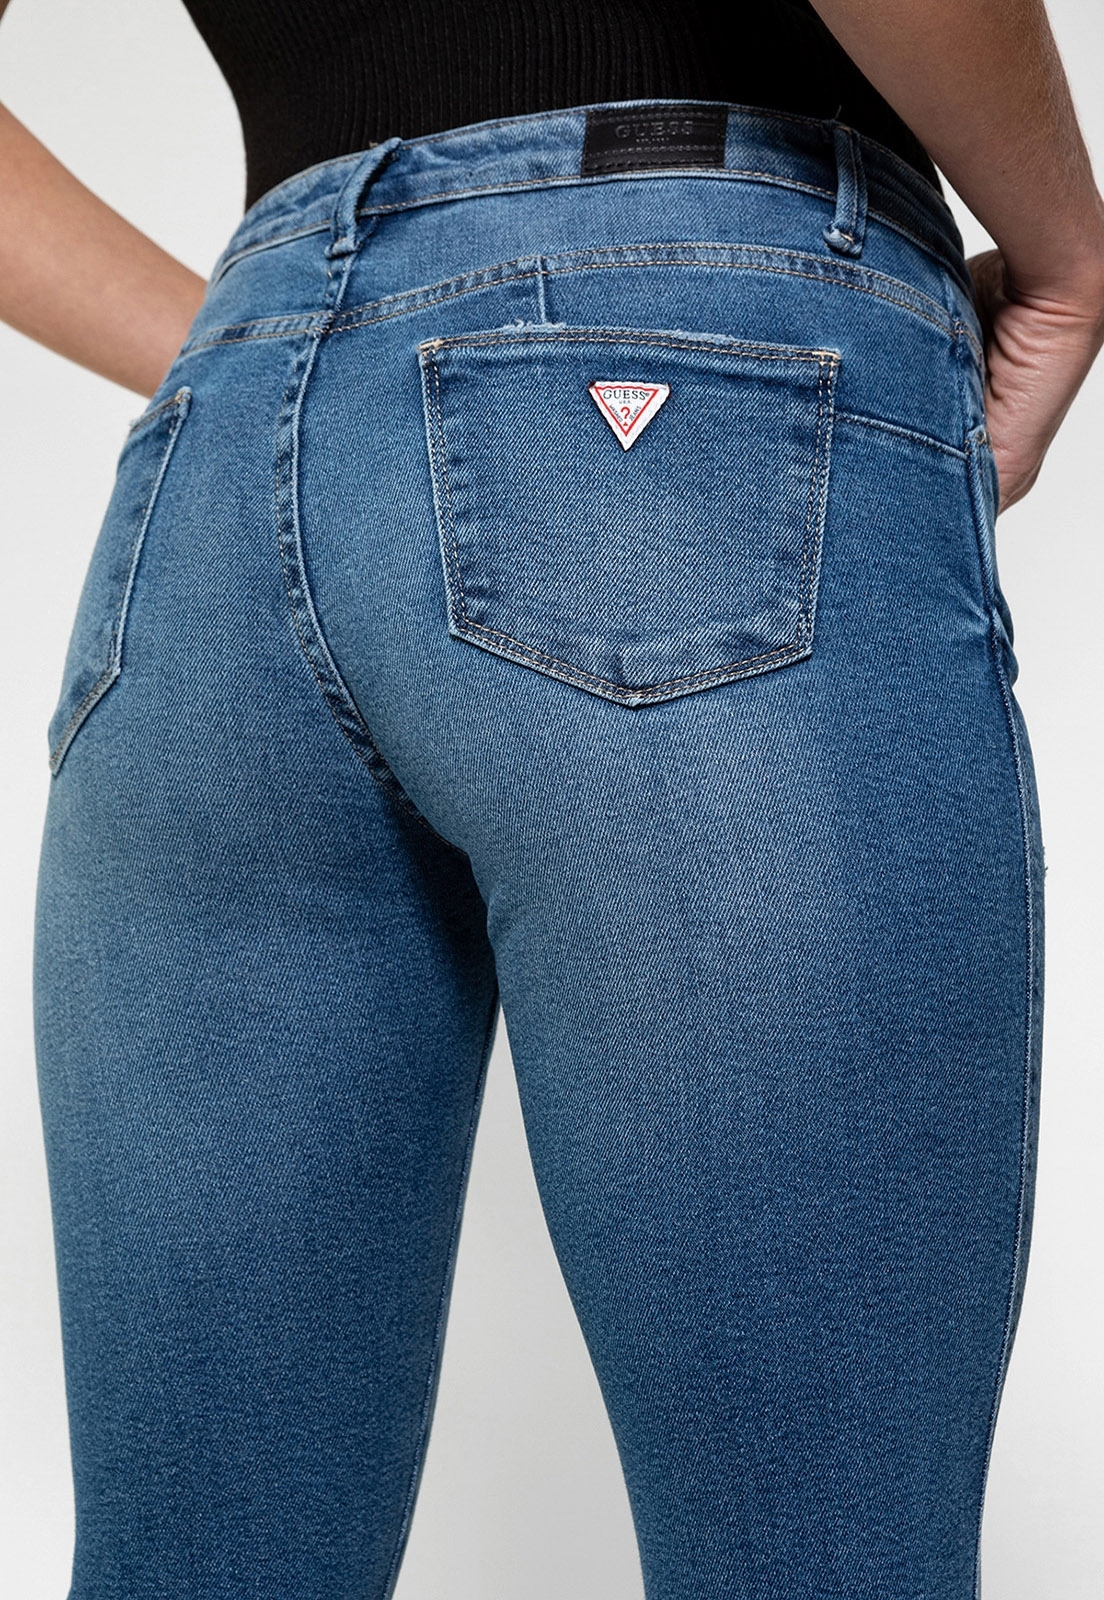 Jeans skinny Guess lavado medio corte cintura para mujer